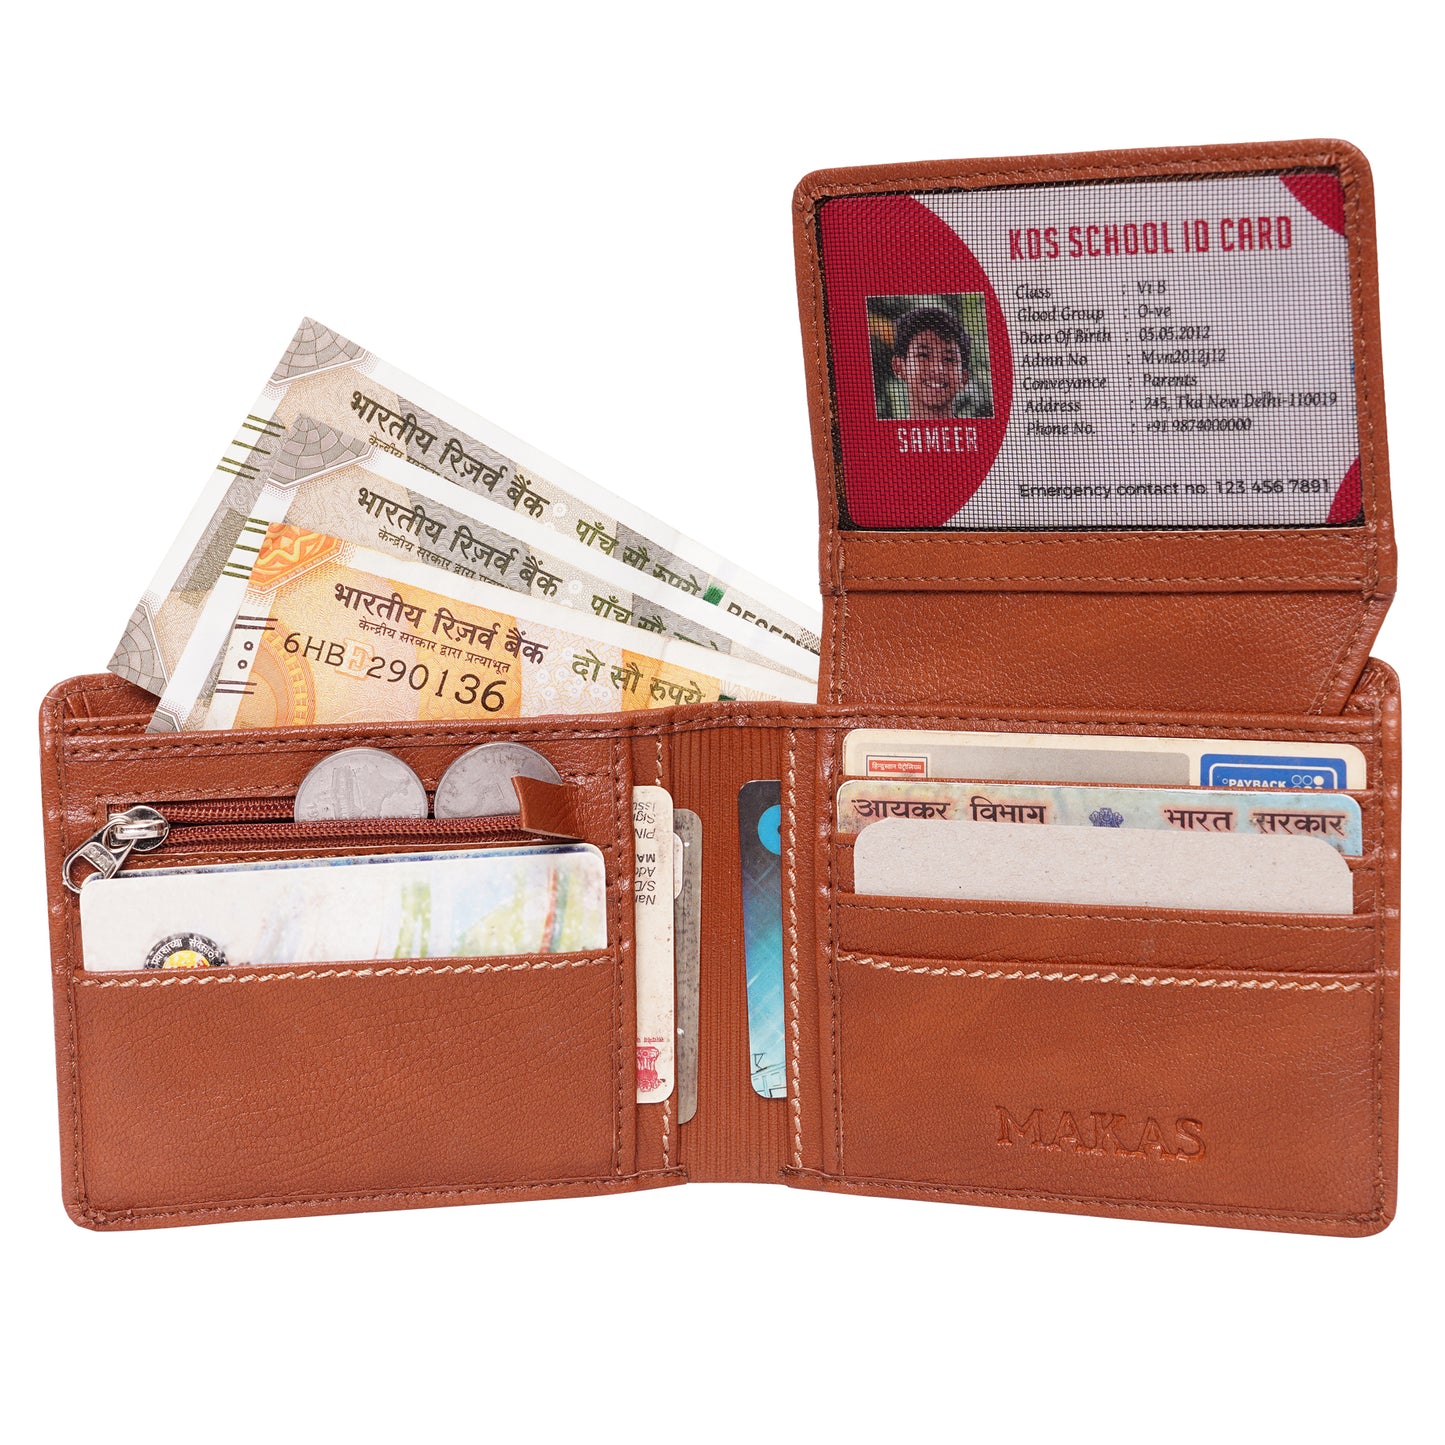 Makas Men's card holder wallet , internal view 1,color-Tan